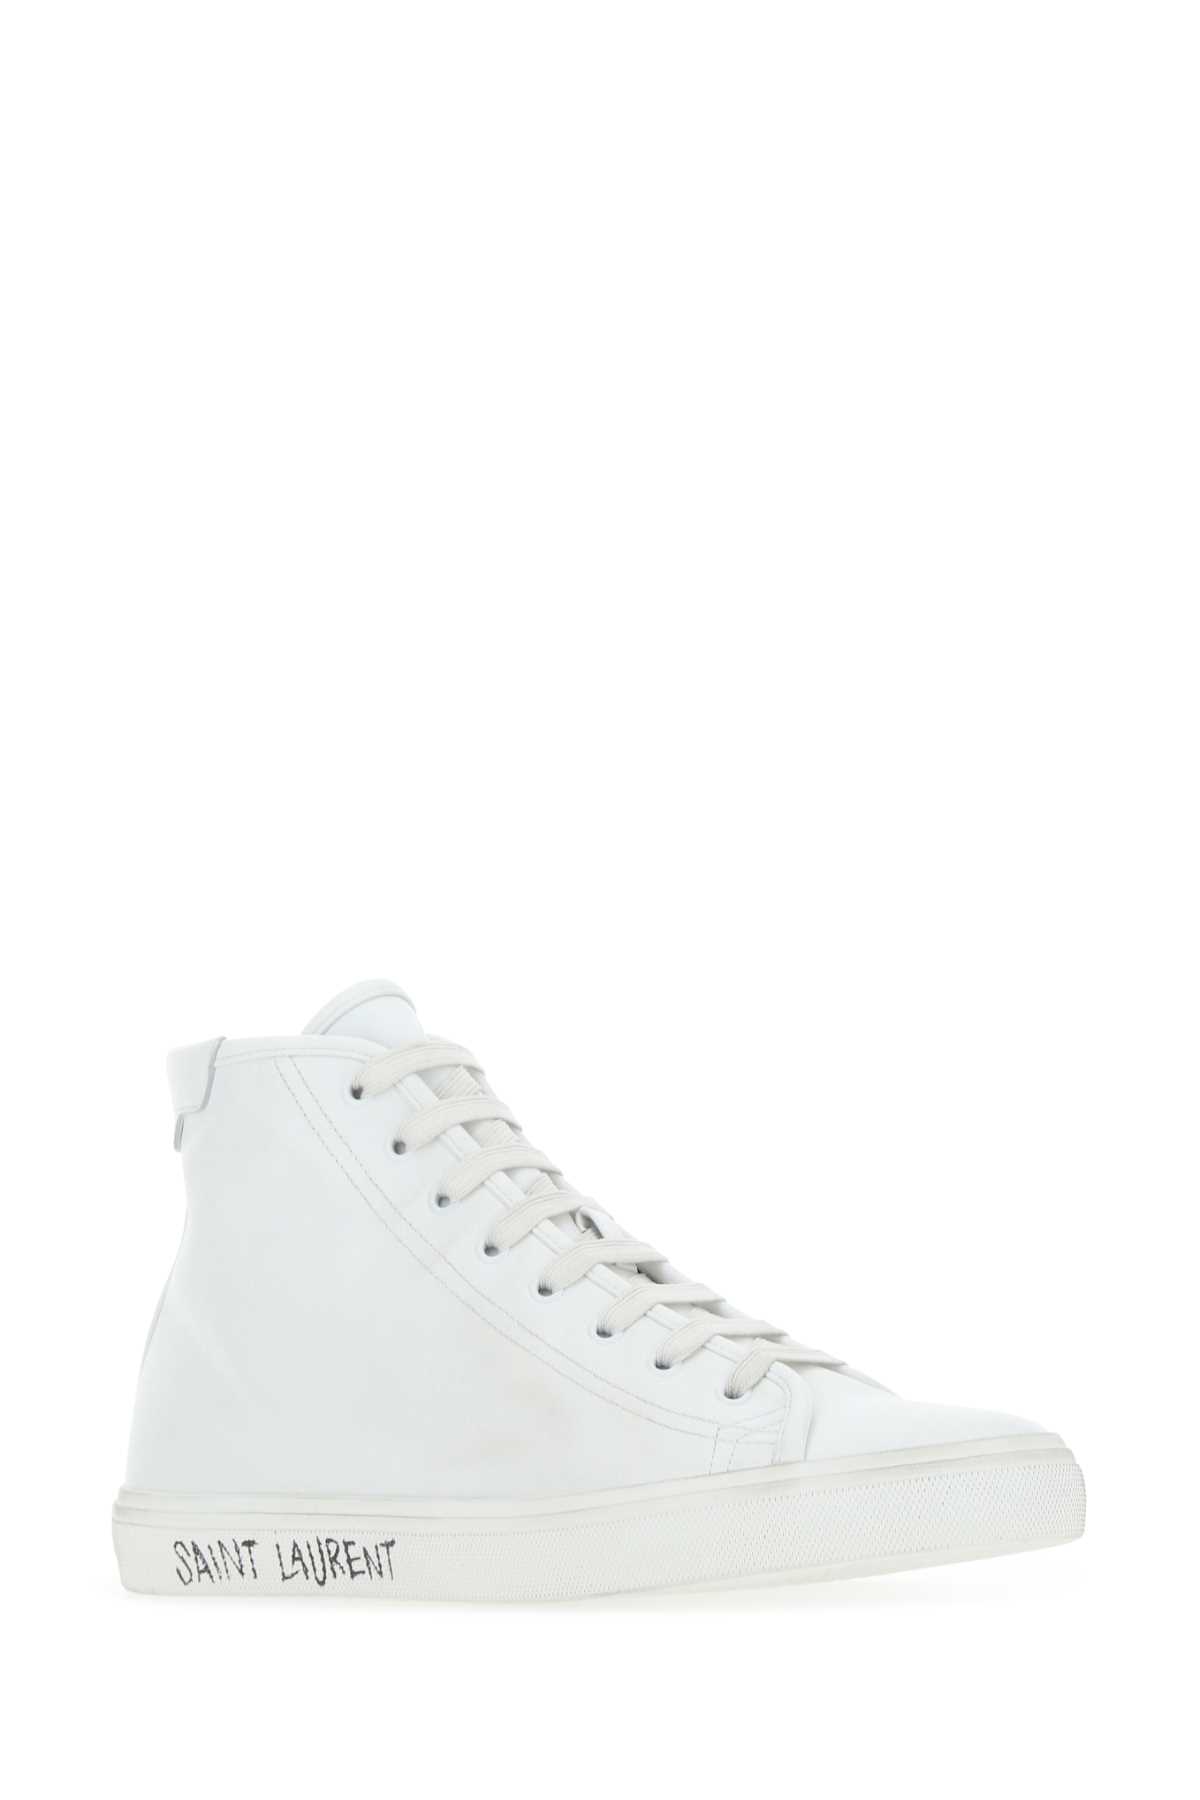 Saint Laurent White Leather Malibu Sneakers